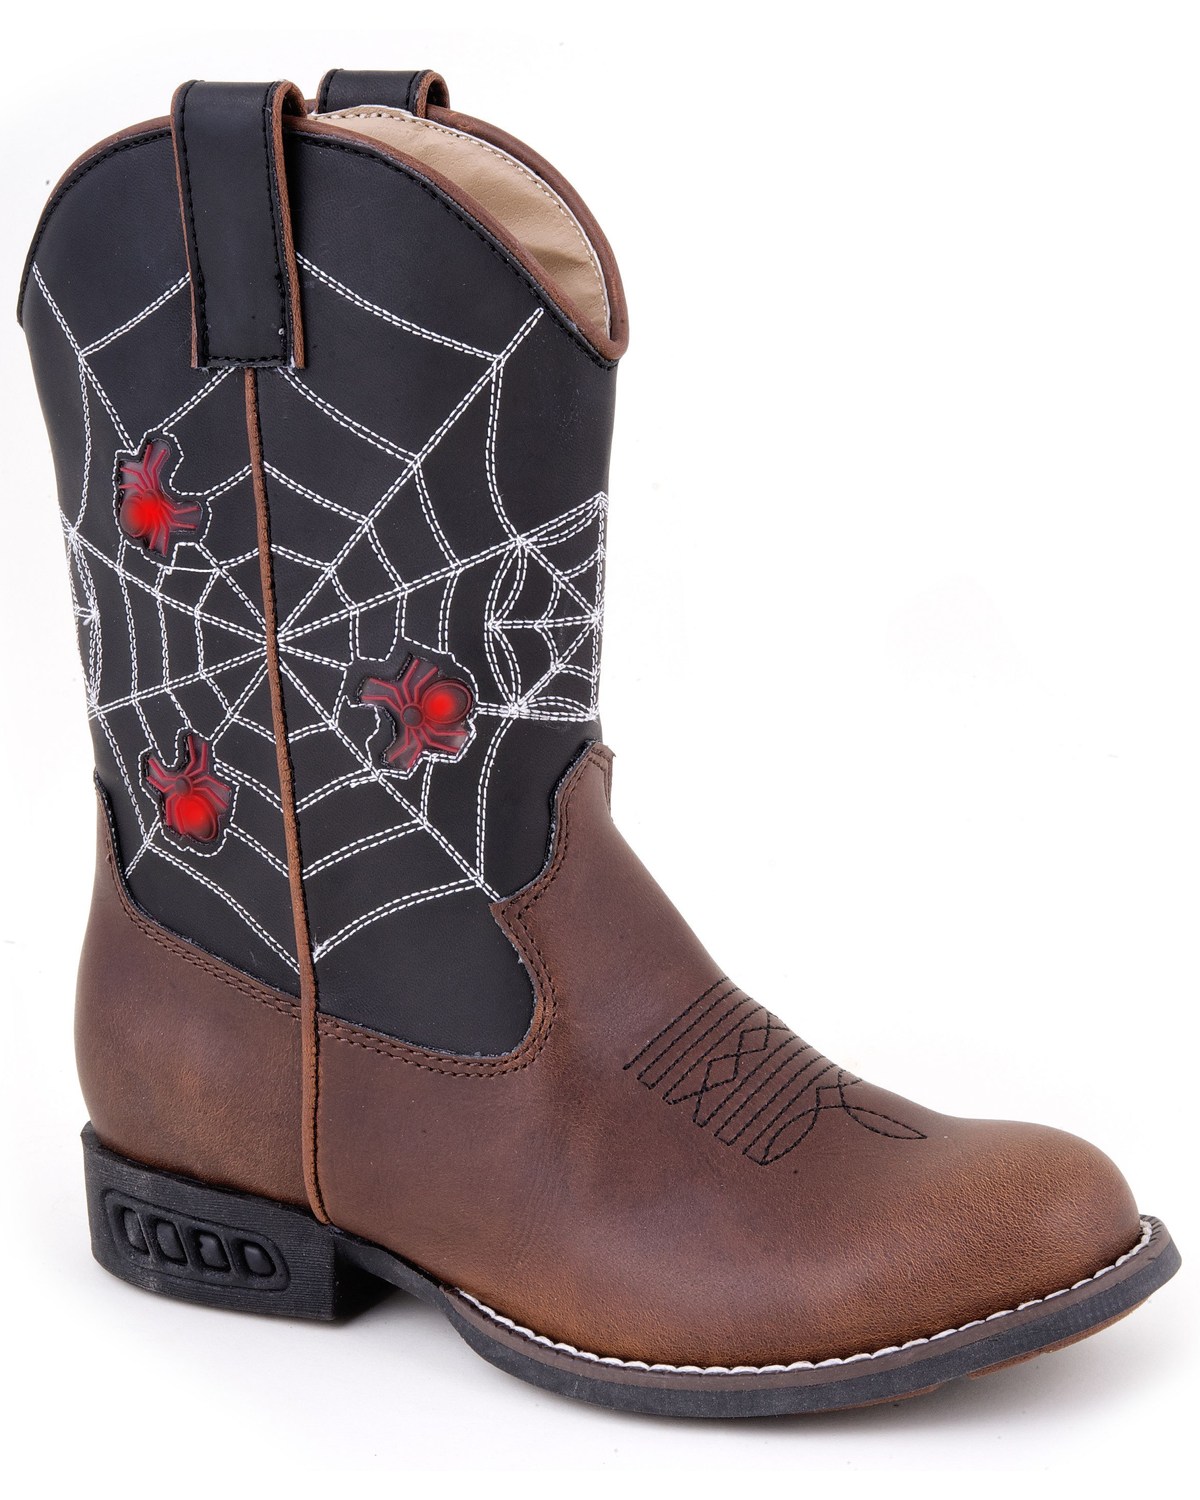 Roper Kid's Light Up Spider Web Western Boots